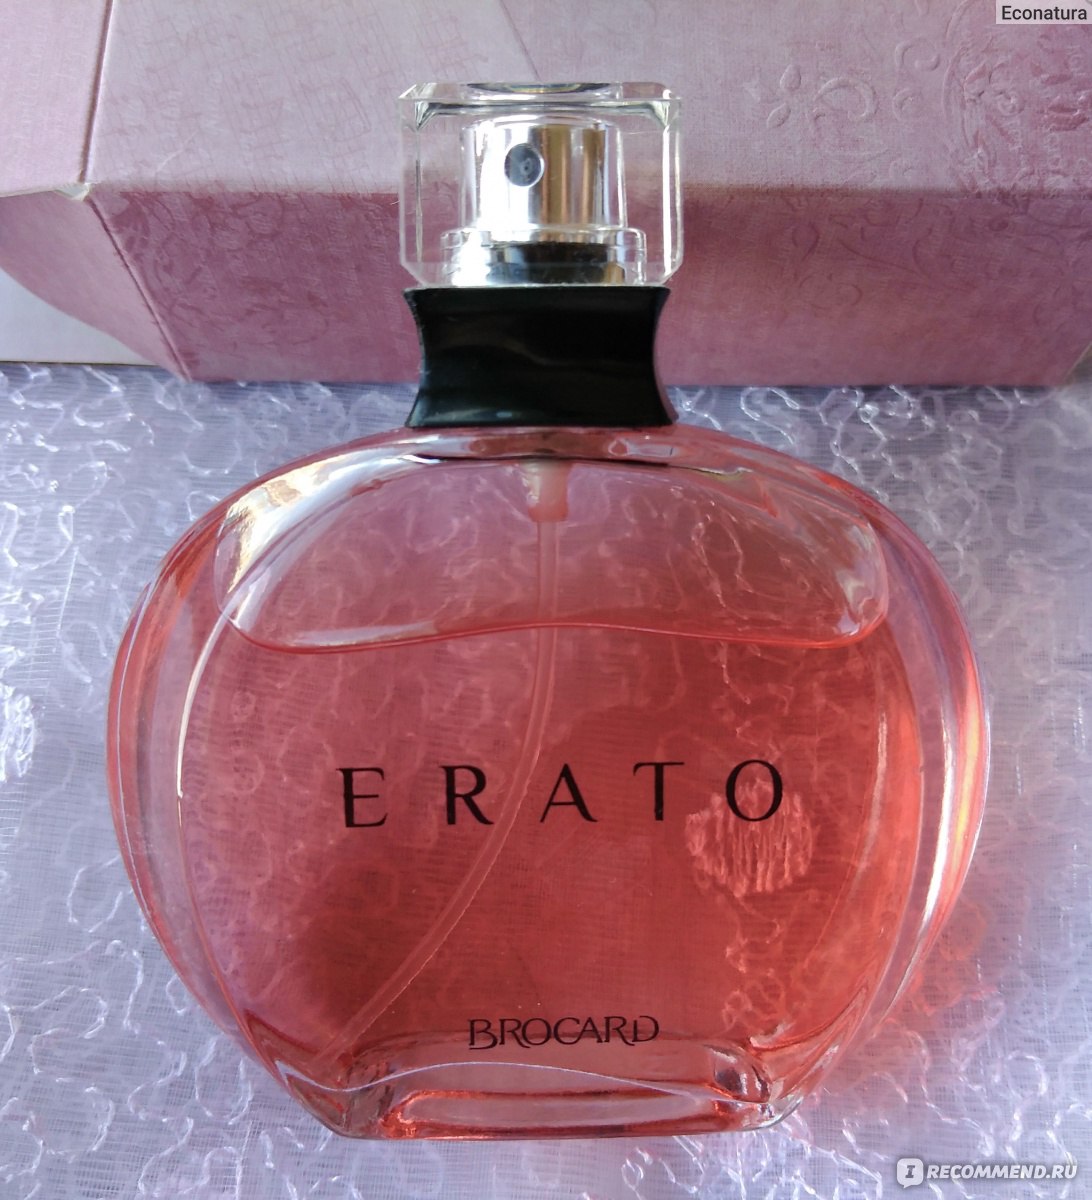  парфюмерная вода Erato Brocard